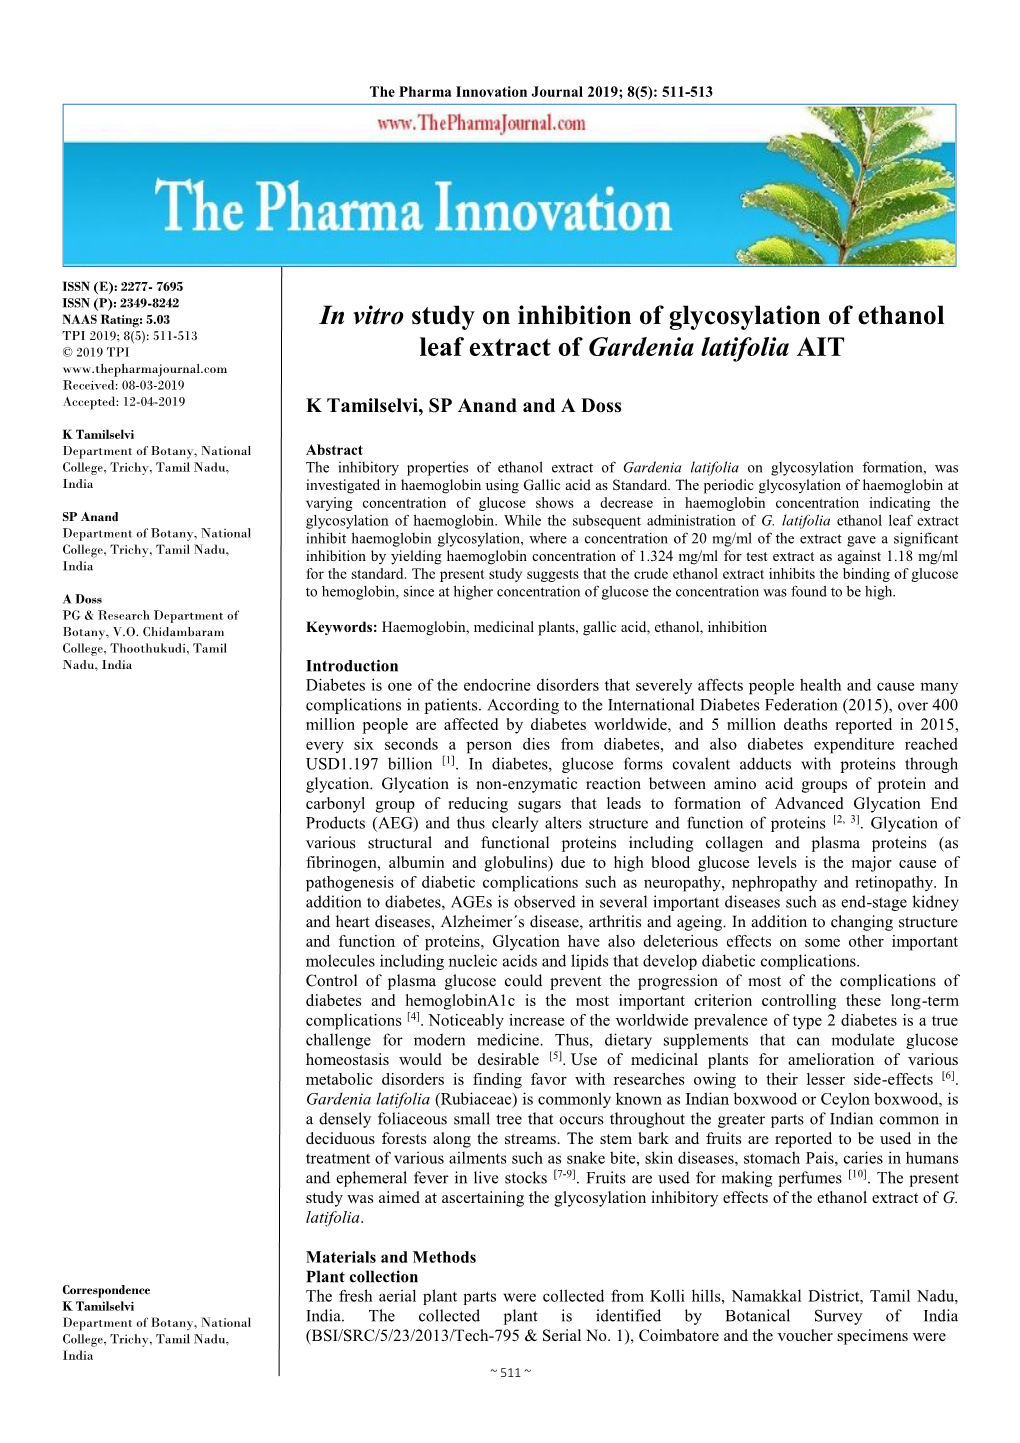 In Vitro Study on Inhibition of Glycosylation of Ethanol Leaf Extract